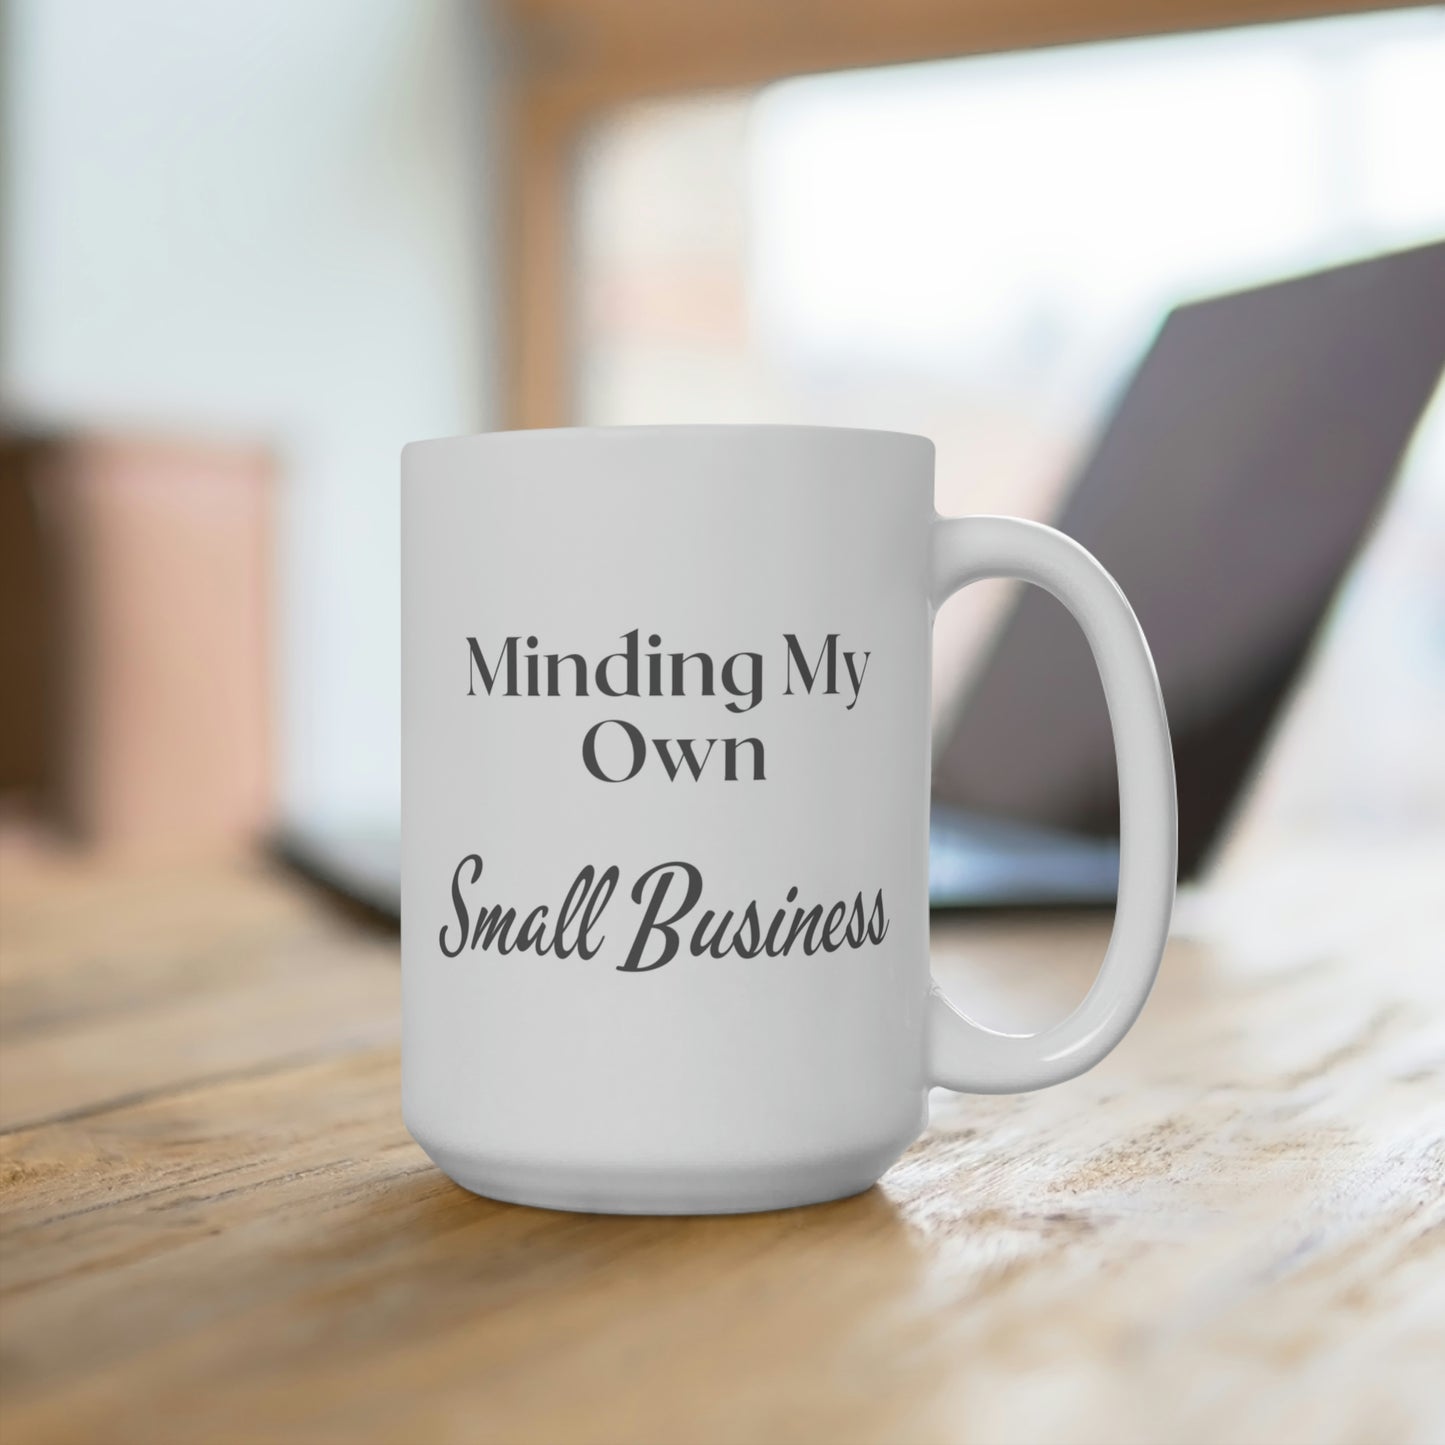 Minding My Own Small Business Ceramic Mugs (11oz / 15oz / 20oz)